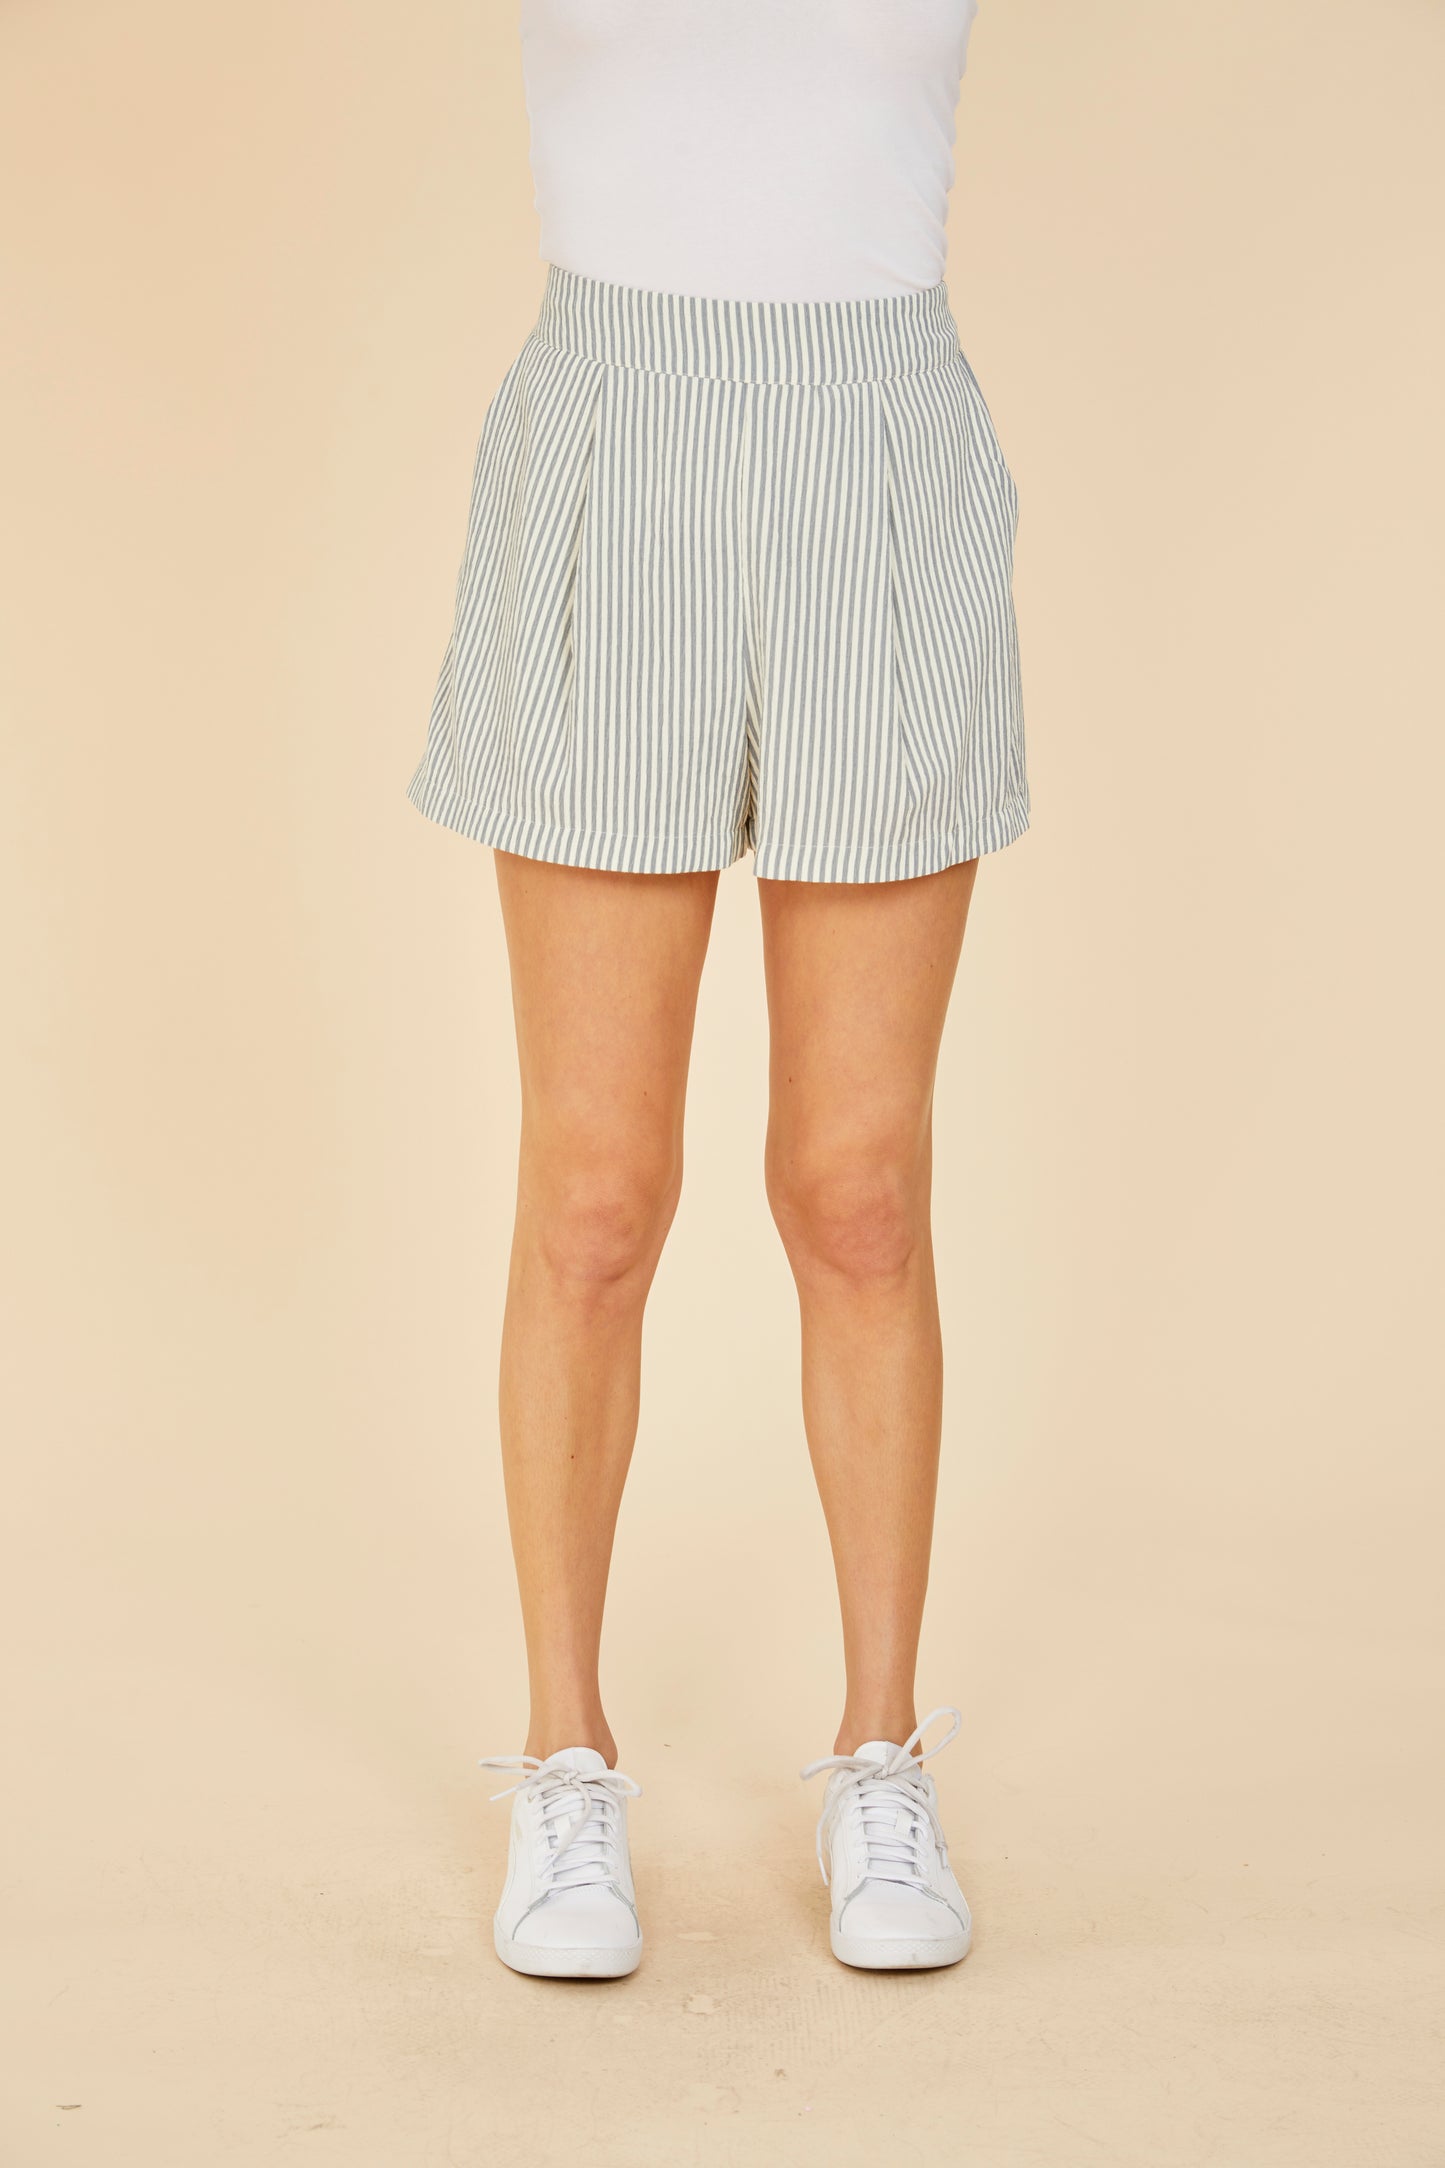 Striped Seer Sucker Shorts